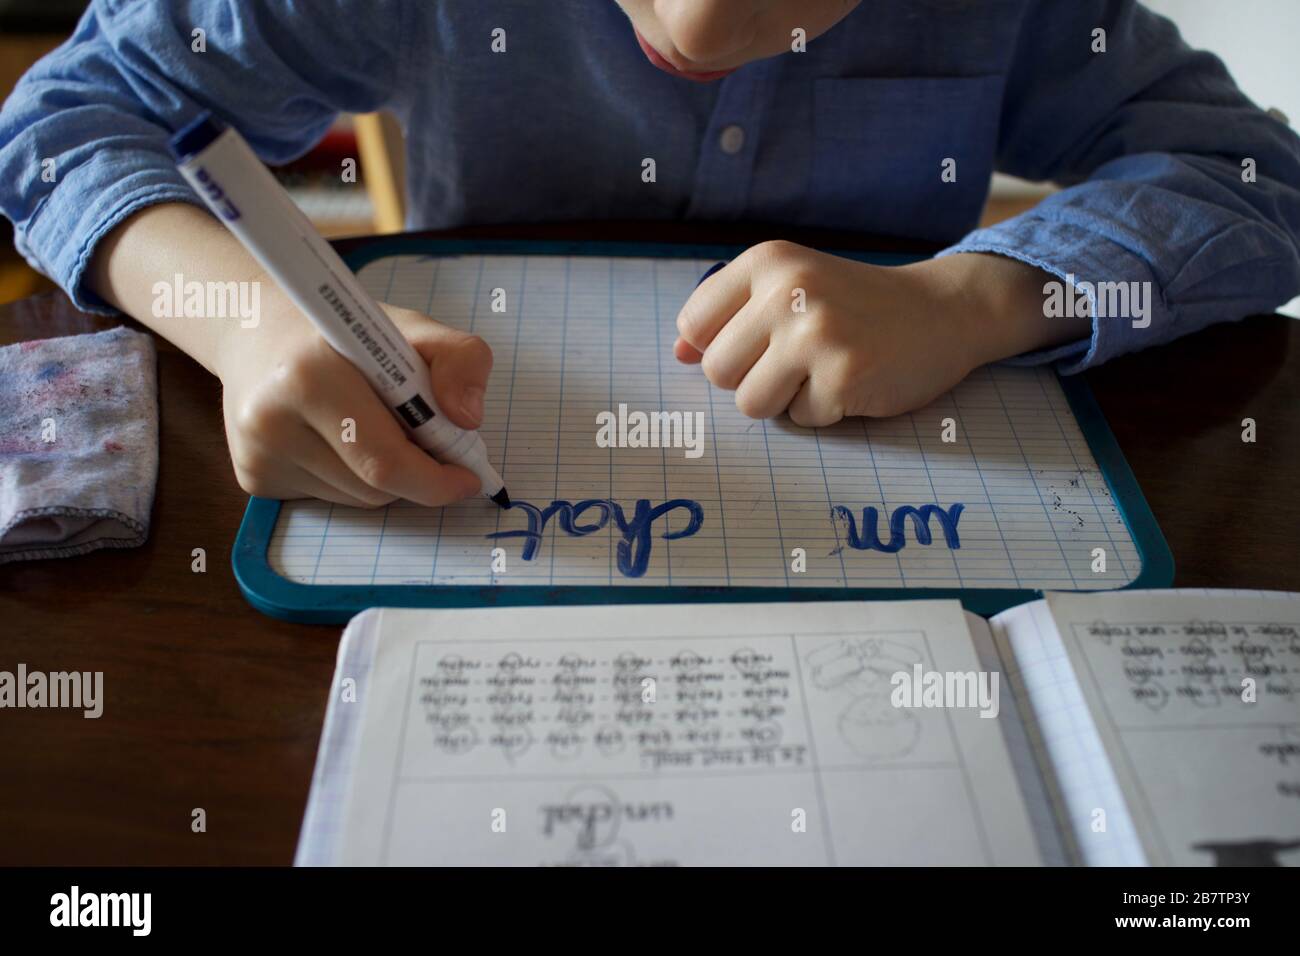 Child being homeschooled during the Coronavirus pandemic - learning to write Stock Photo